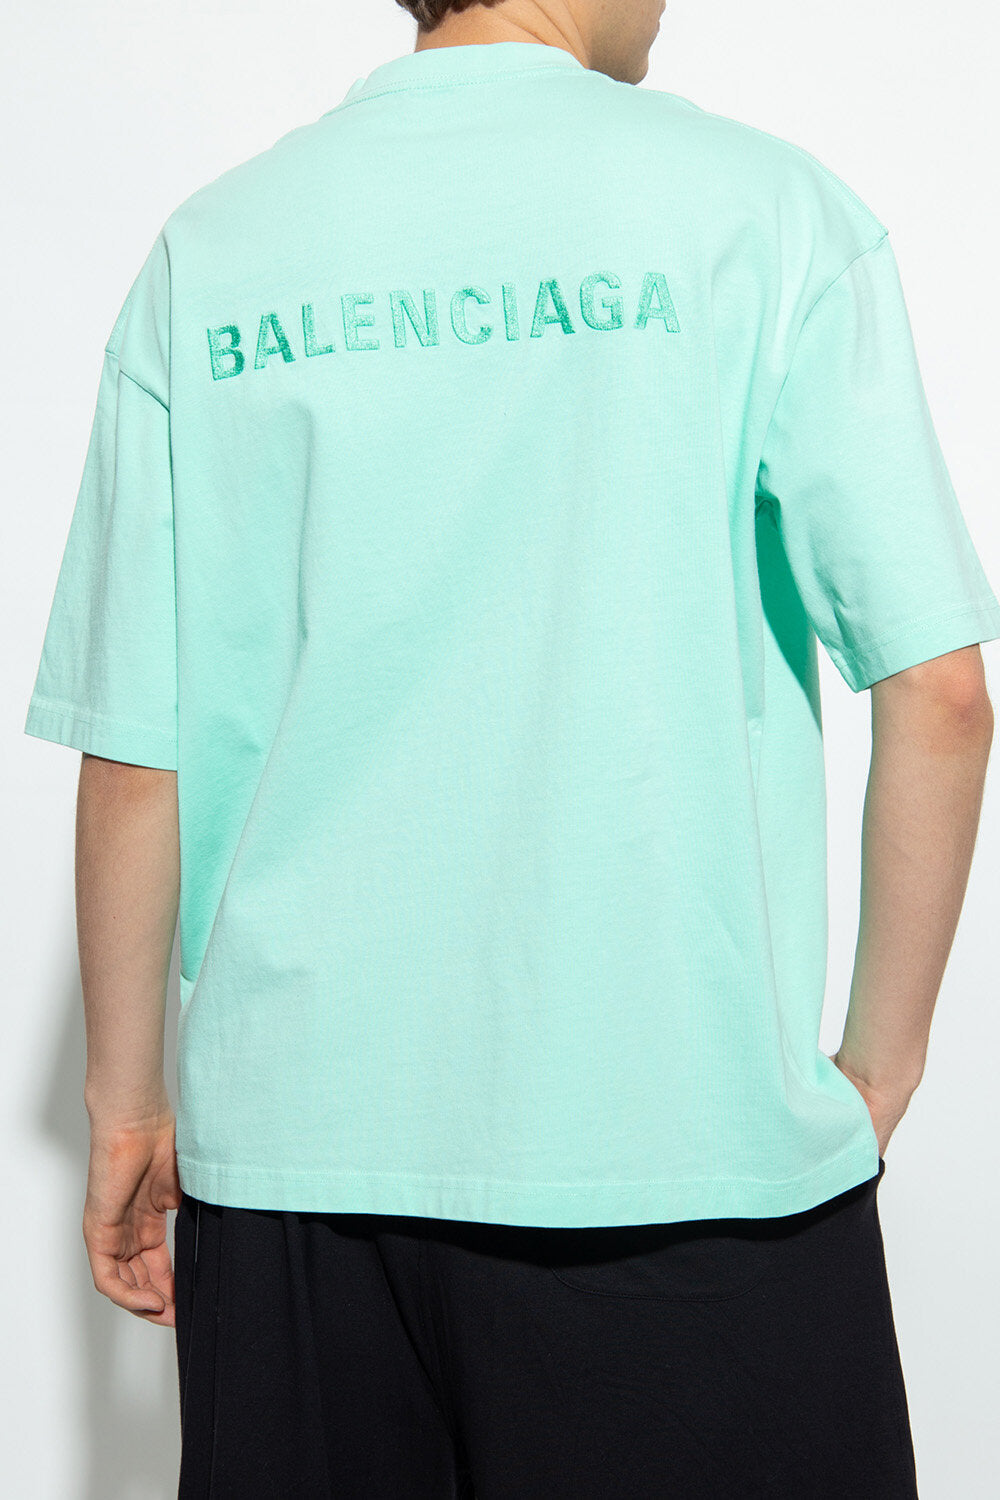 Balenciaga Embroidered Logo T-shirt in Green